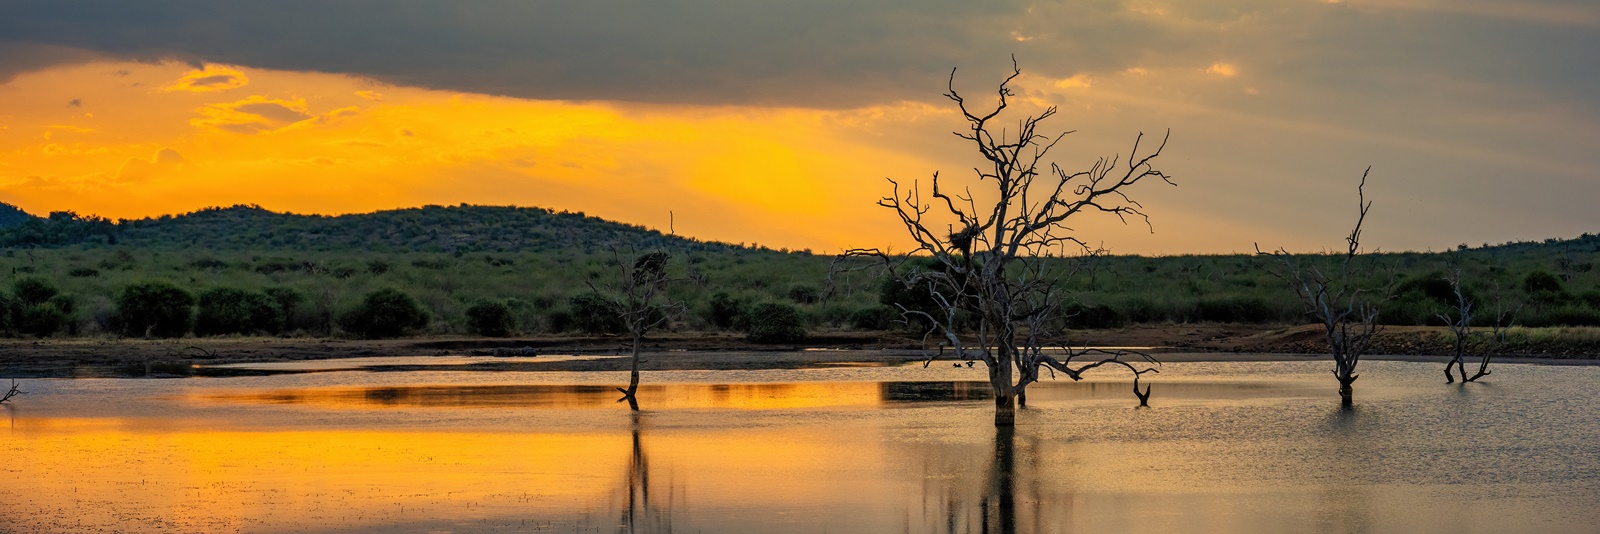 Madikwe Game Reserve REPORT|マディクウェ動物保護区 視察ブログ